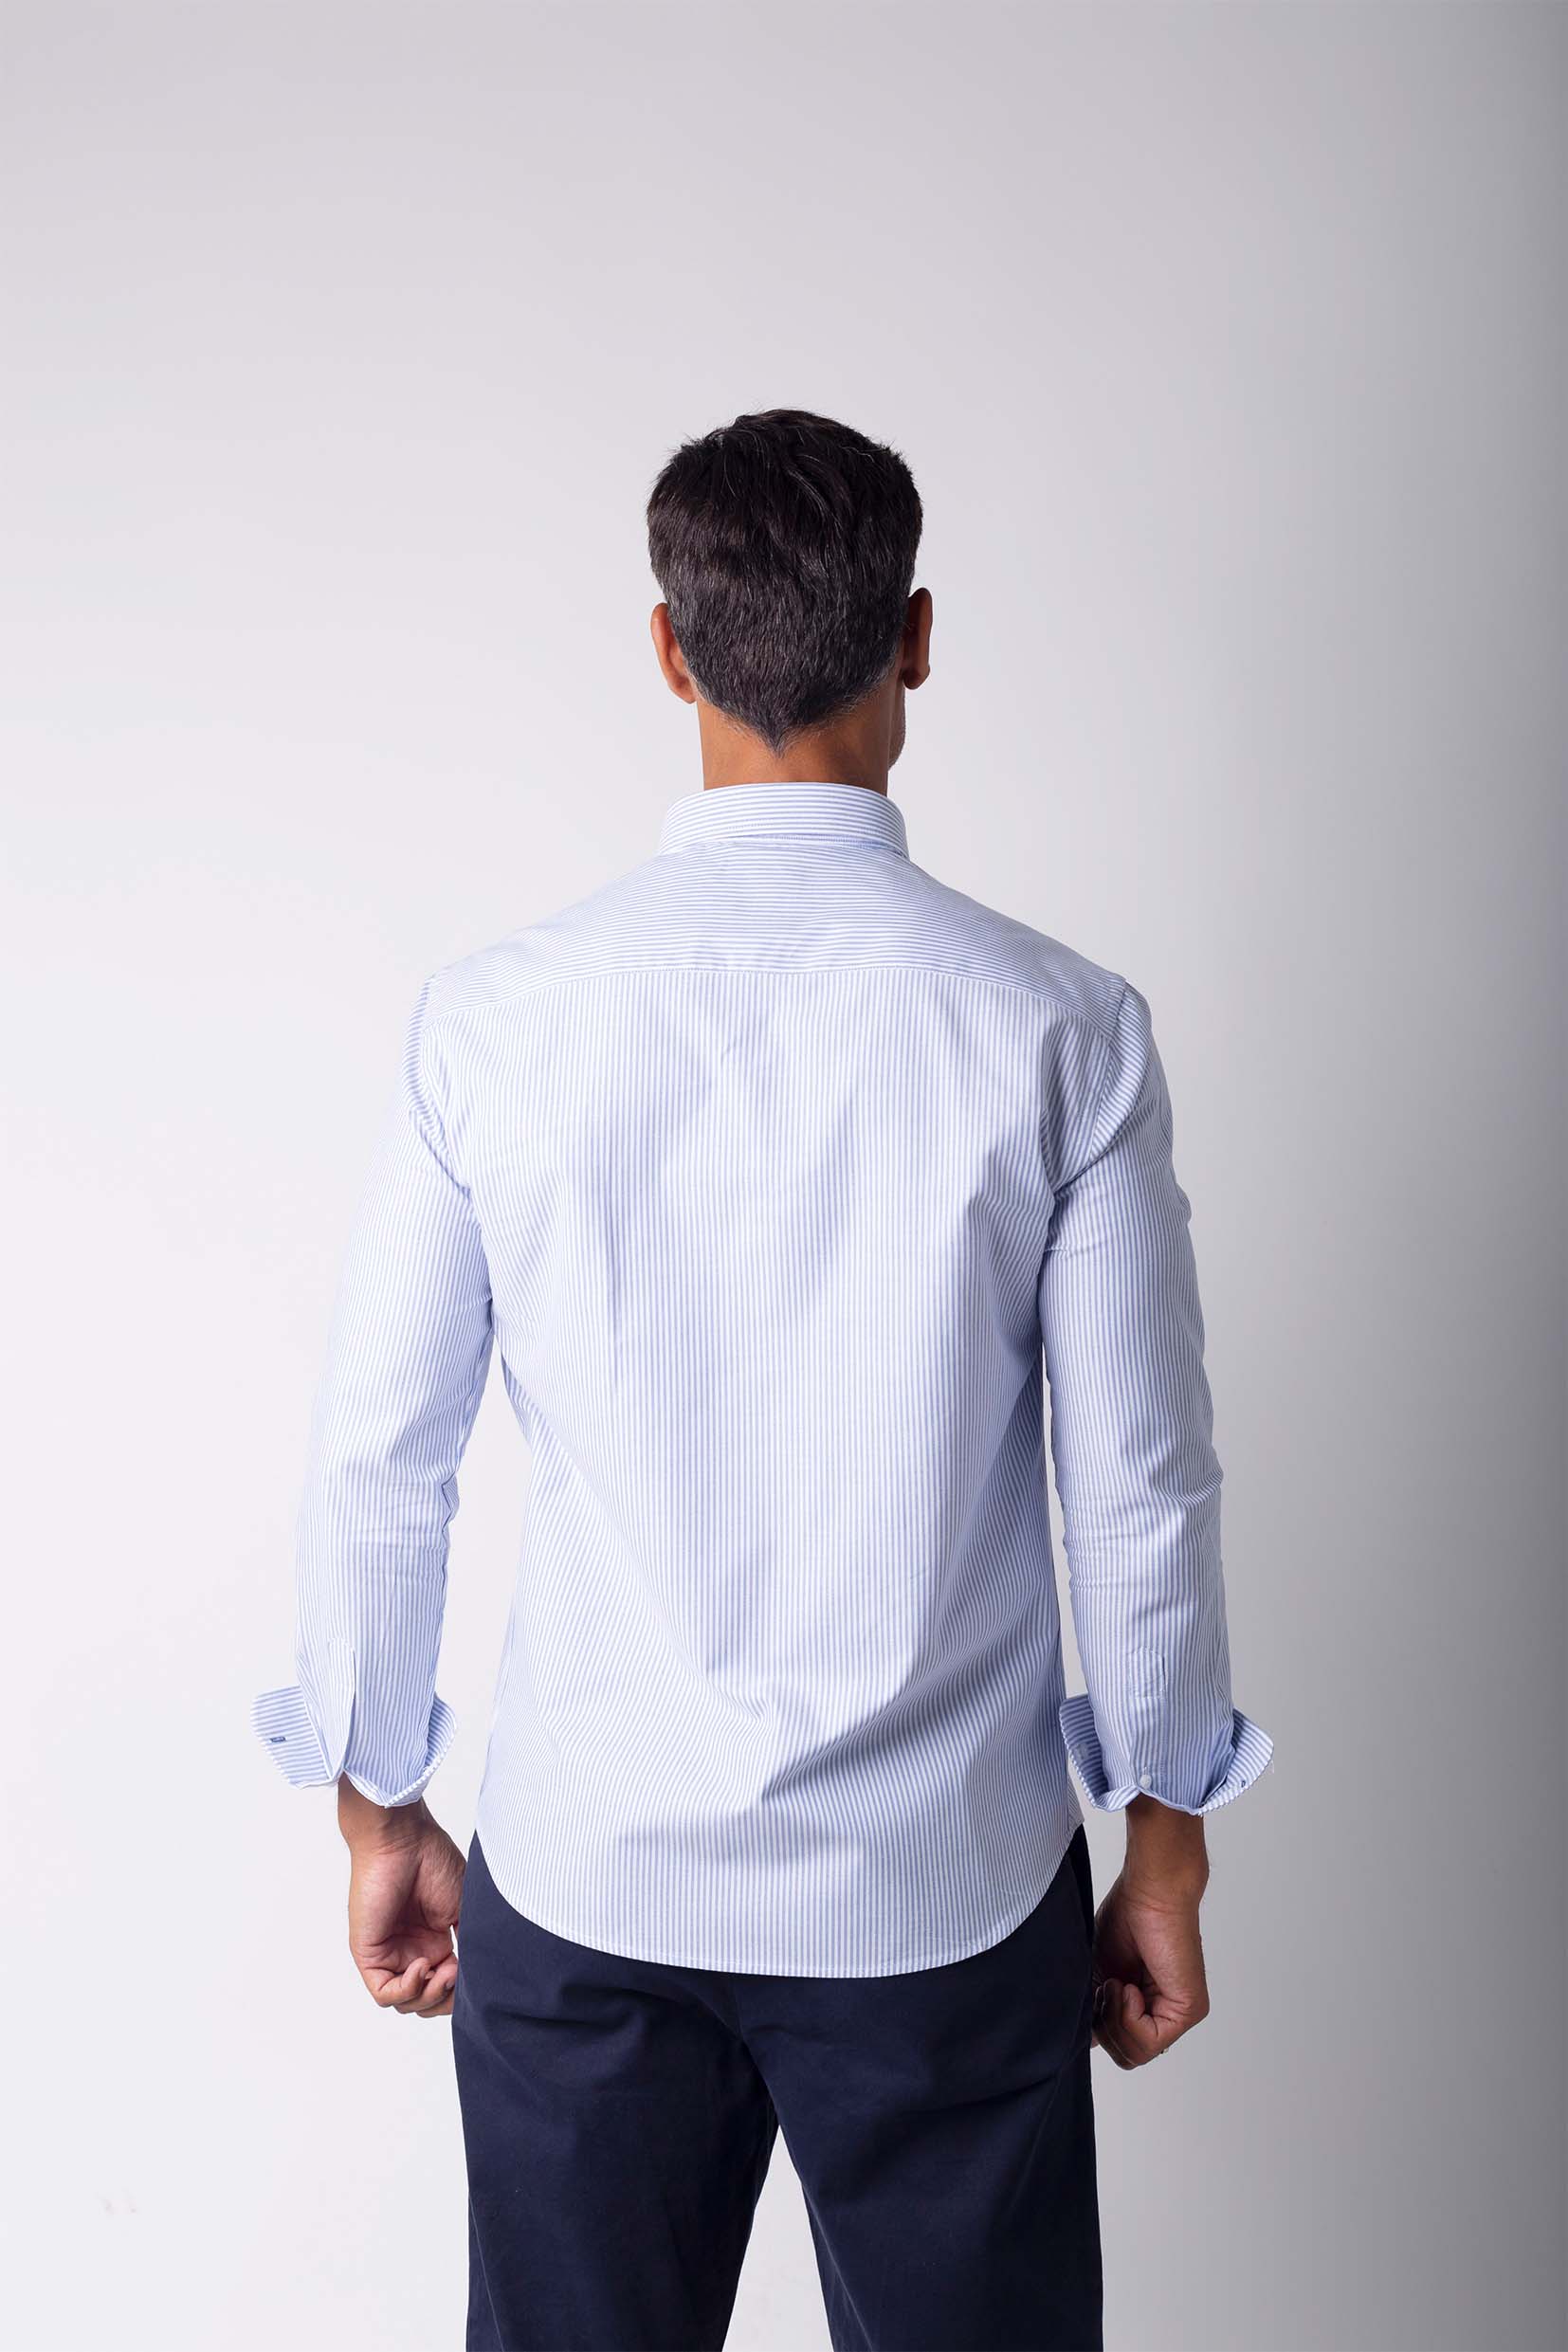 camisa azul rallas blancas Colección pura alma